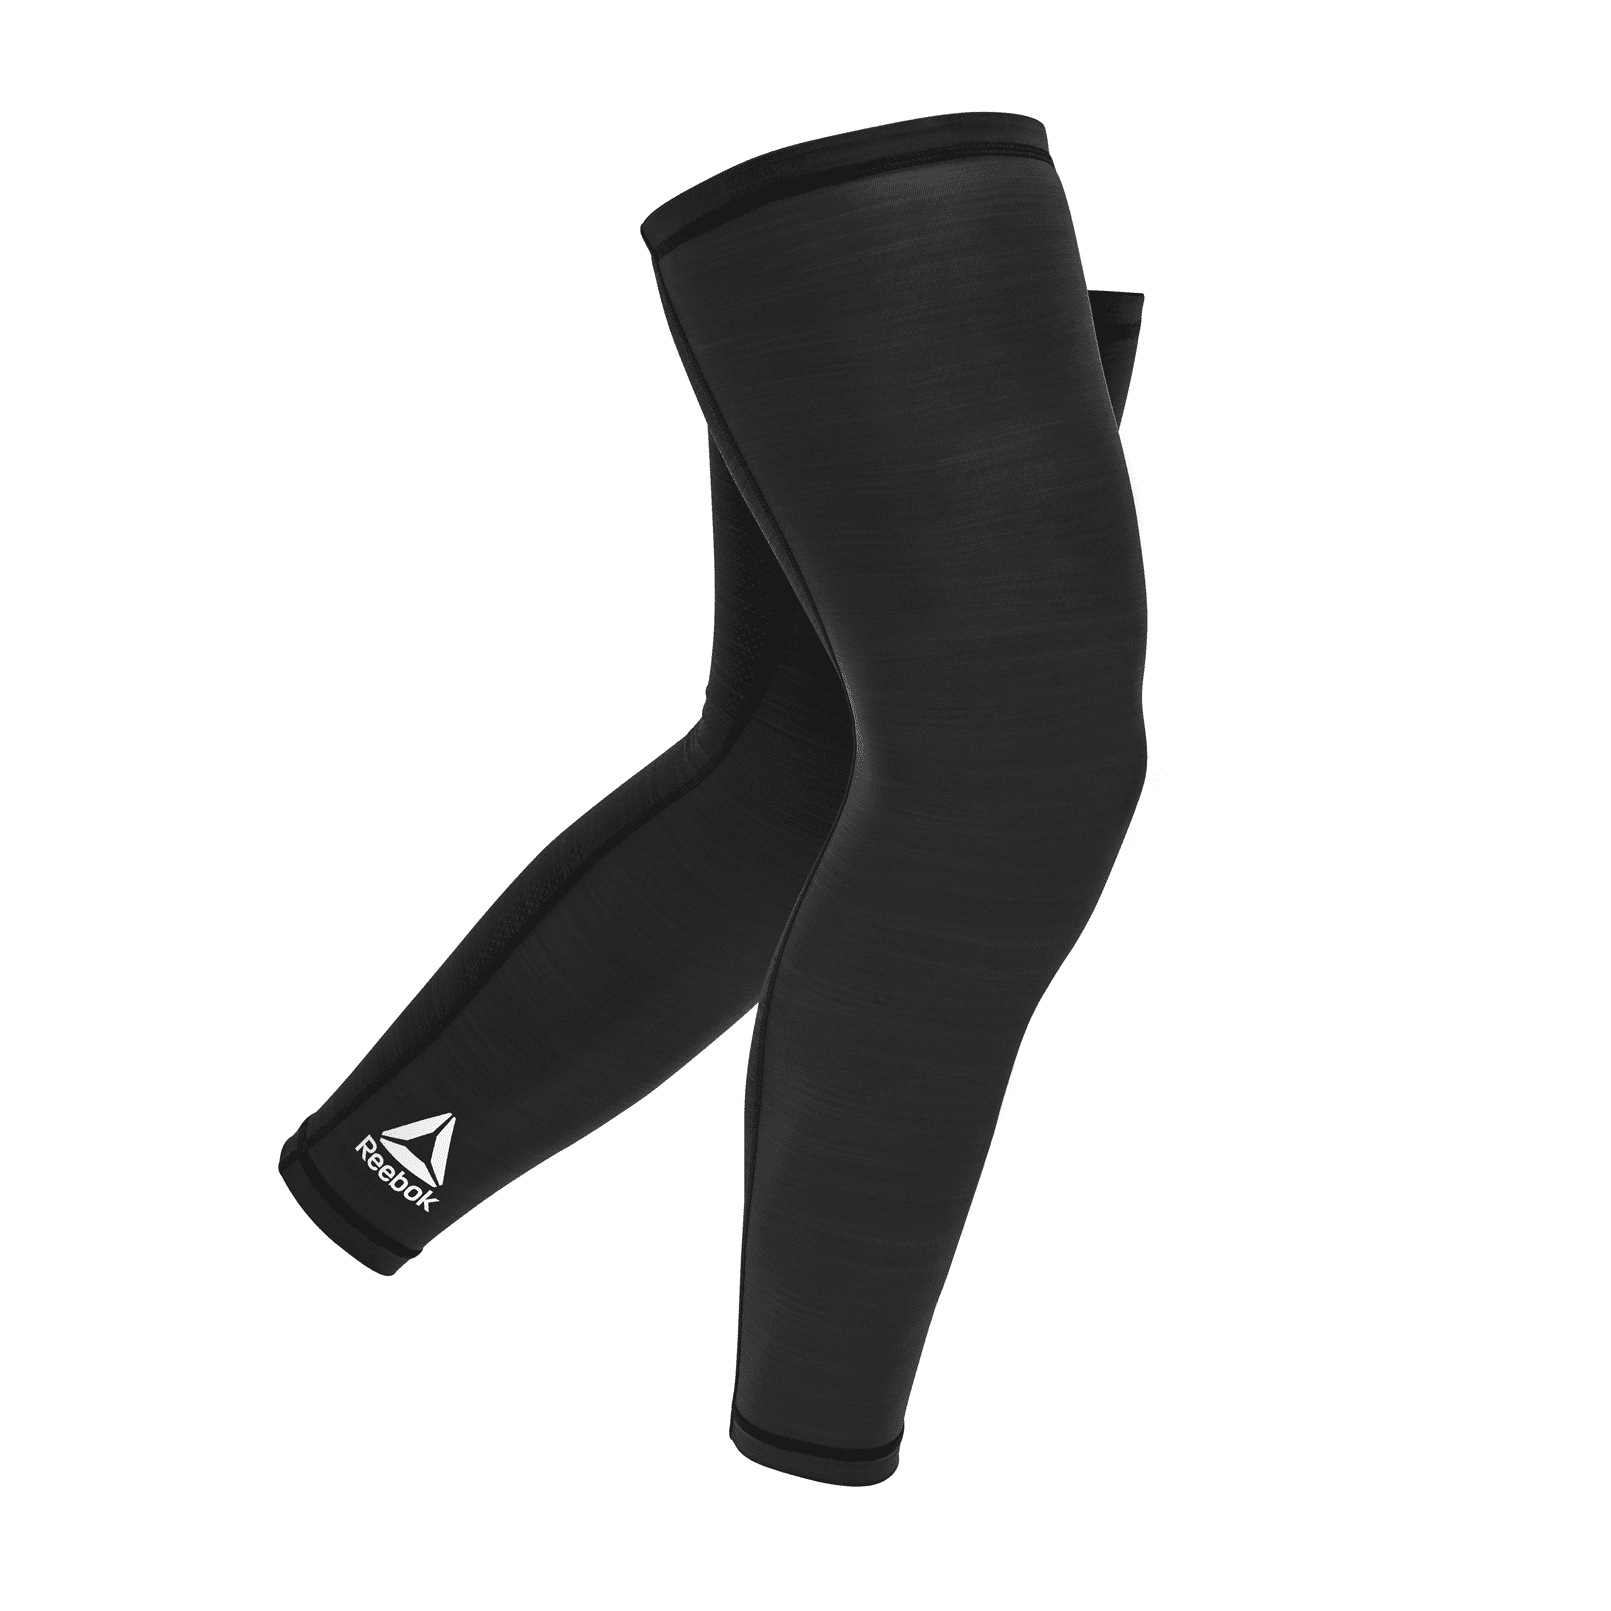 Reebok Activchill Compression Leg Sleeves, Black, Pair - Walmart.com